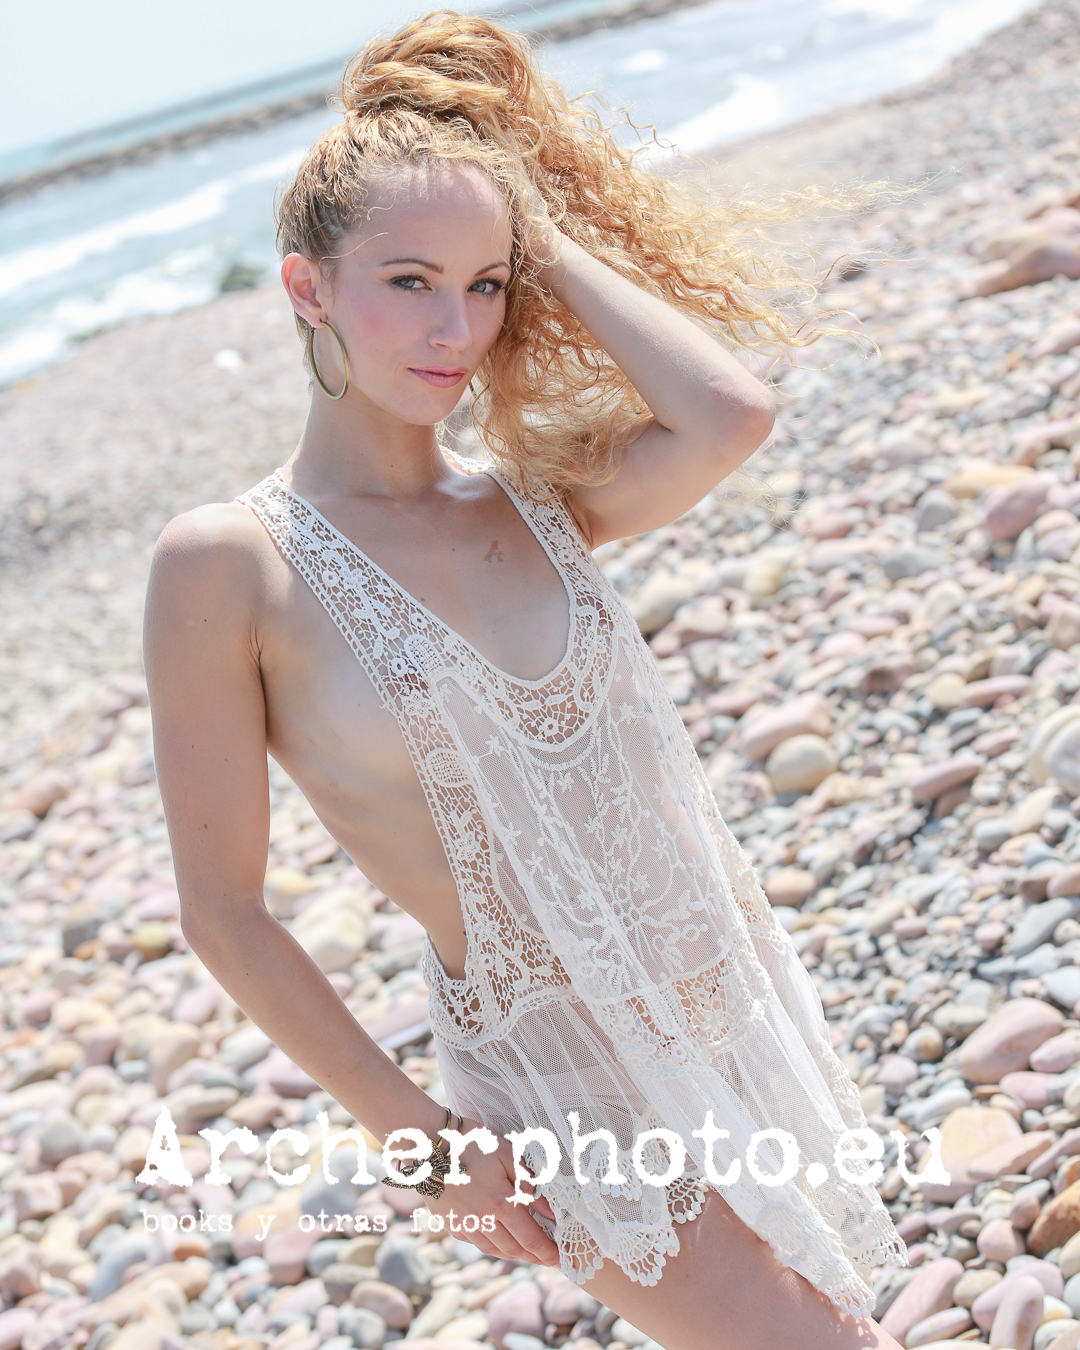 Rebeca, 2015 (8), retrato en la playa por Archerphoto, fotógrafo profesional València